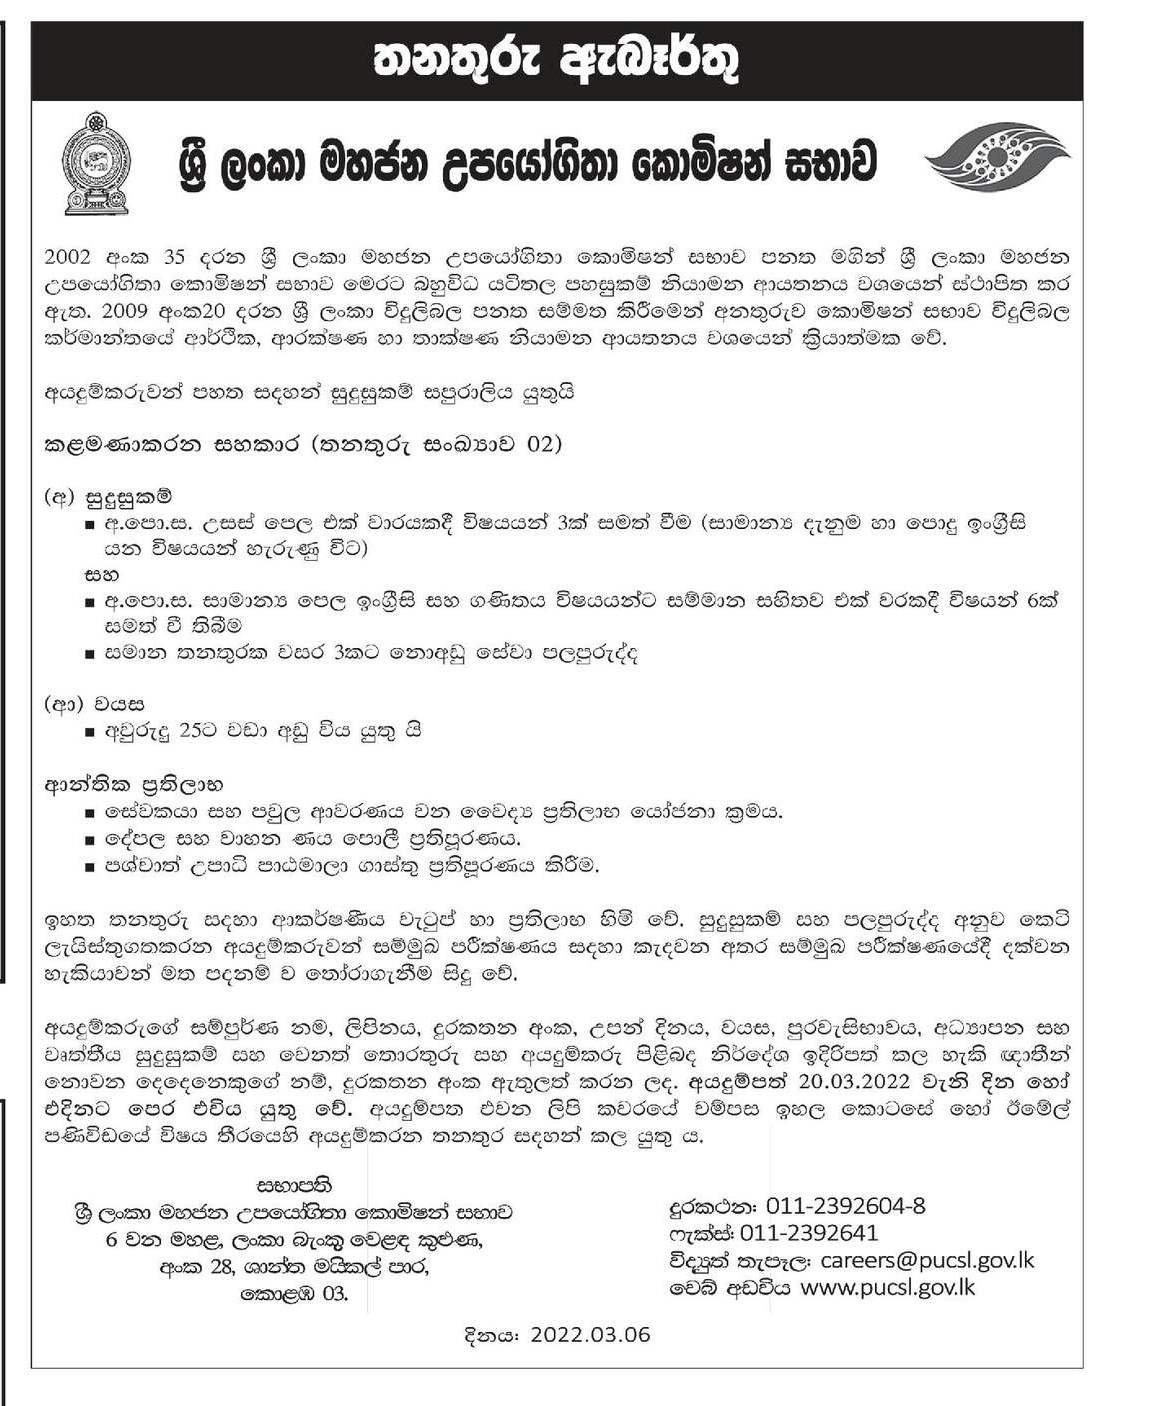 Management Assistant Vacancies Public Utilities Commission of Sri Lanka